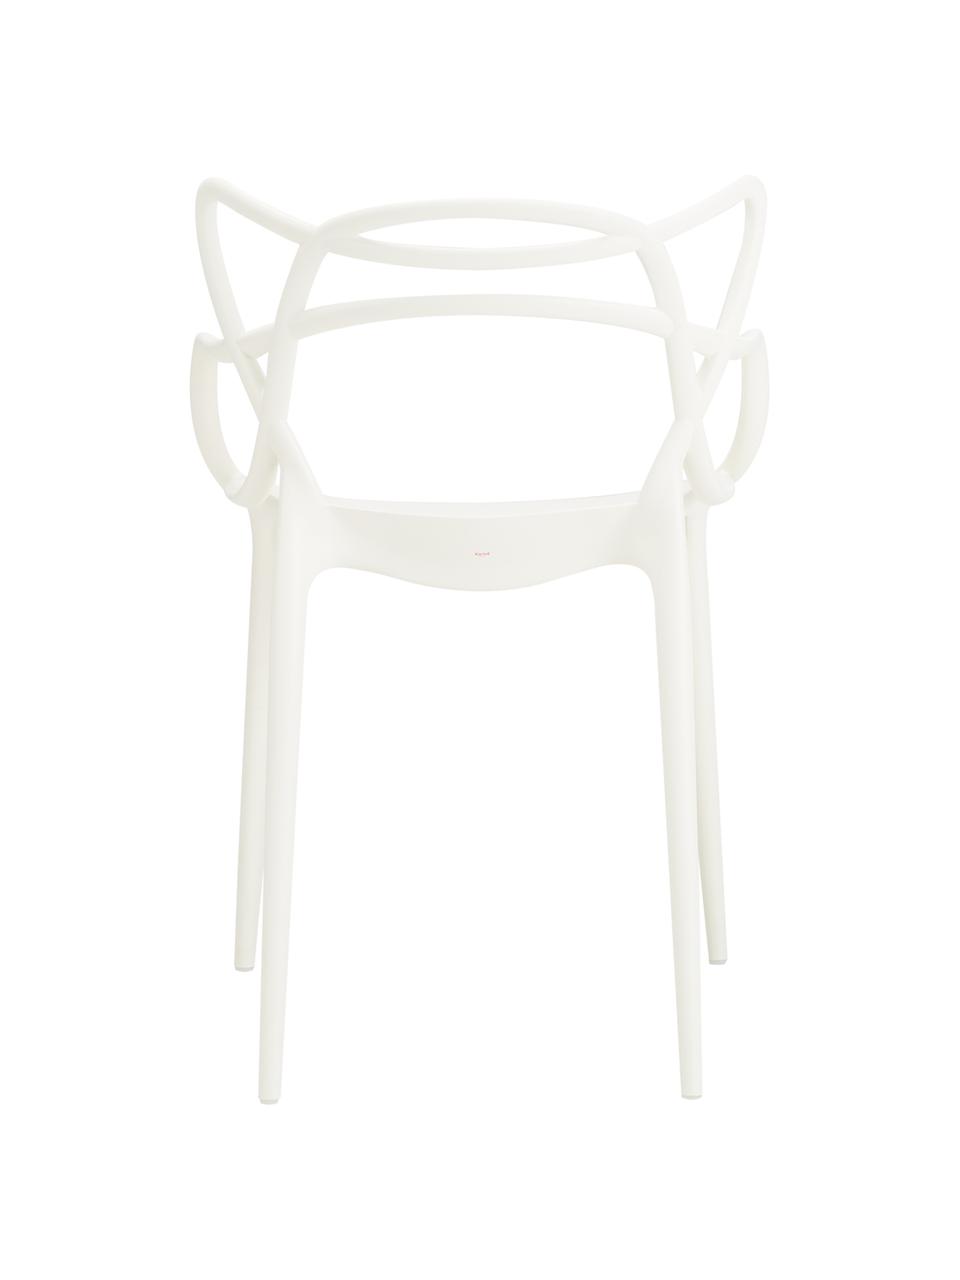 Design Armlehnstühle Masters in Weiß, 2 Stück, Polypropylen, Greenguard-zertifiziert, Weiß, B 57 x H 84 cm